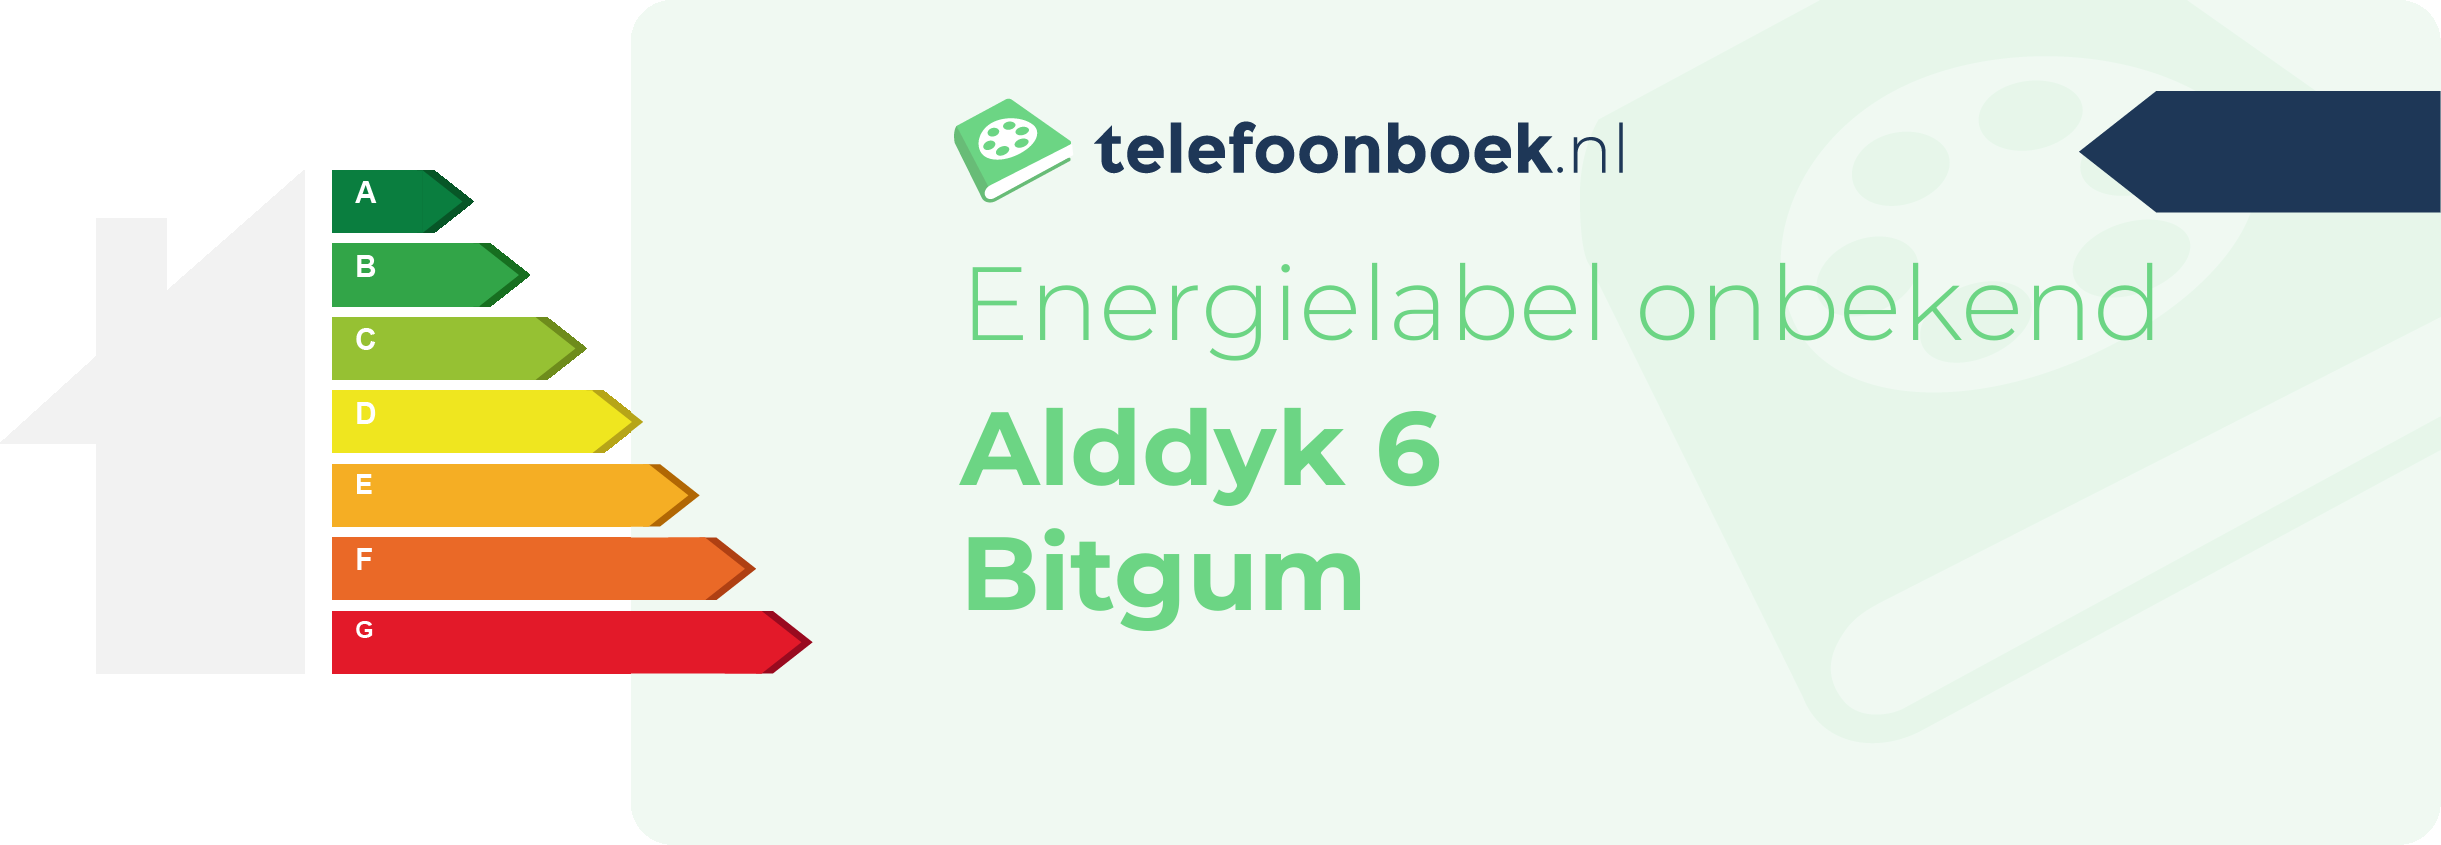 Energielabel Alddyk 6 Bitgum